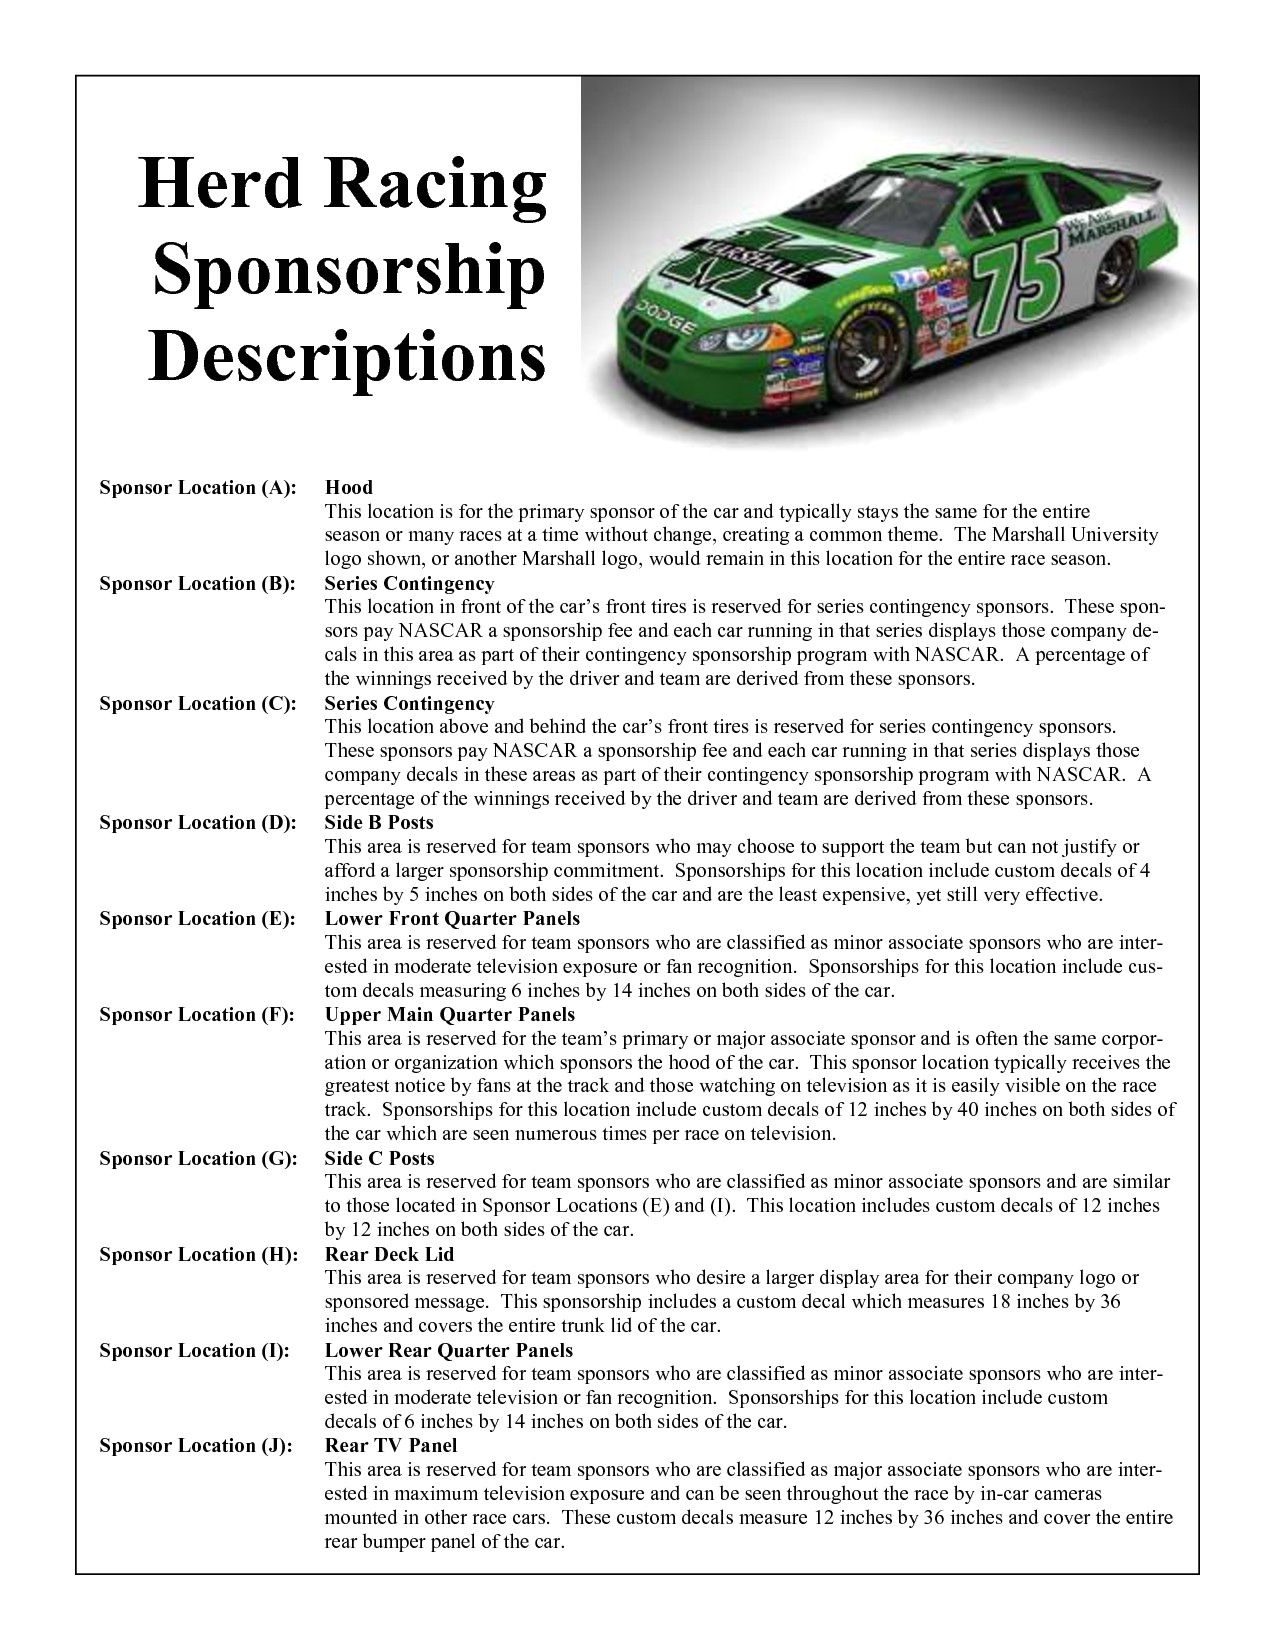 Racing Sponsorship Proposal Template 10 Best Images Of Racing Sponsorship Proposal Template